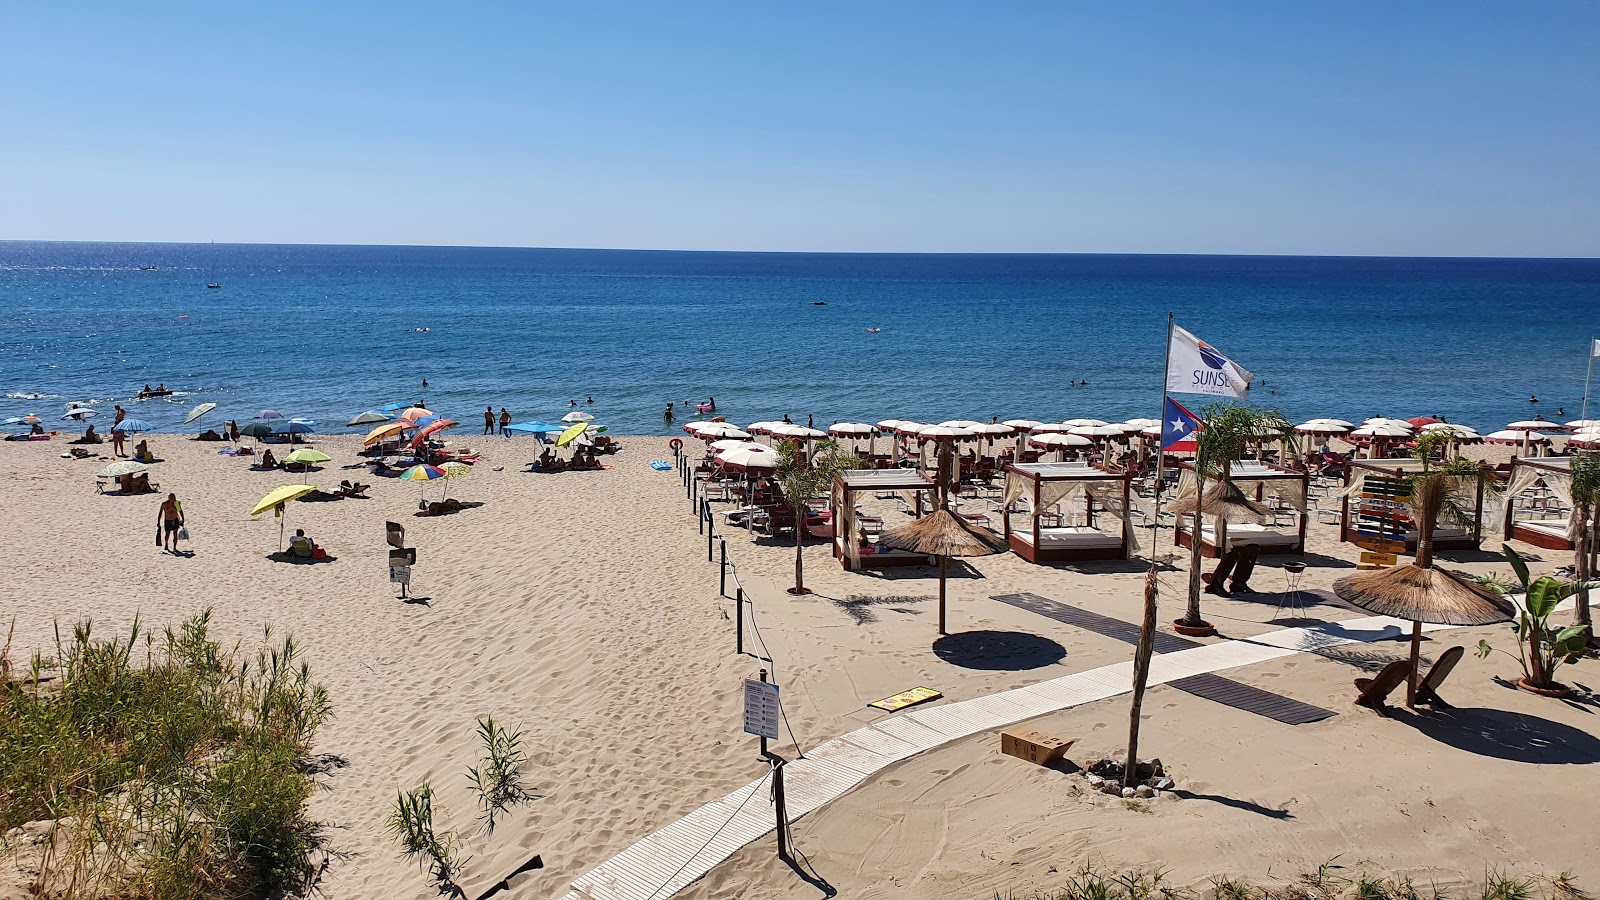 Foto av Spiaggia Le Saline II med ljus sand yta